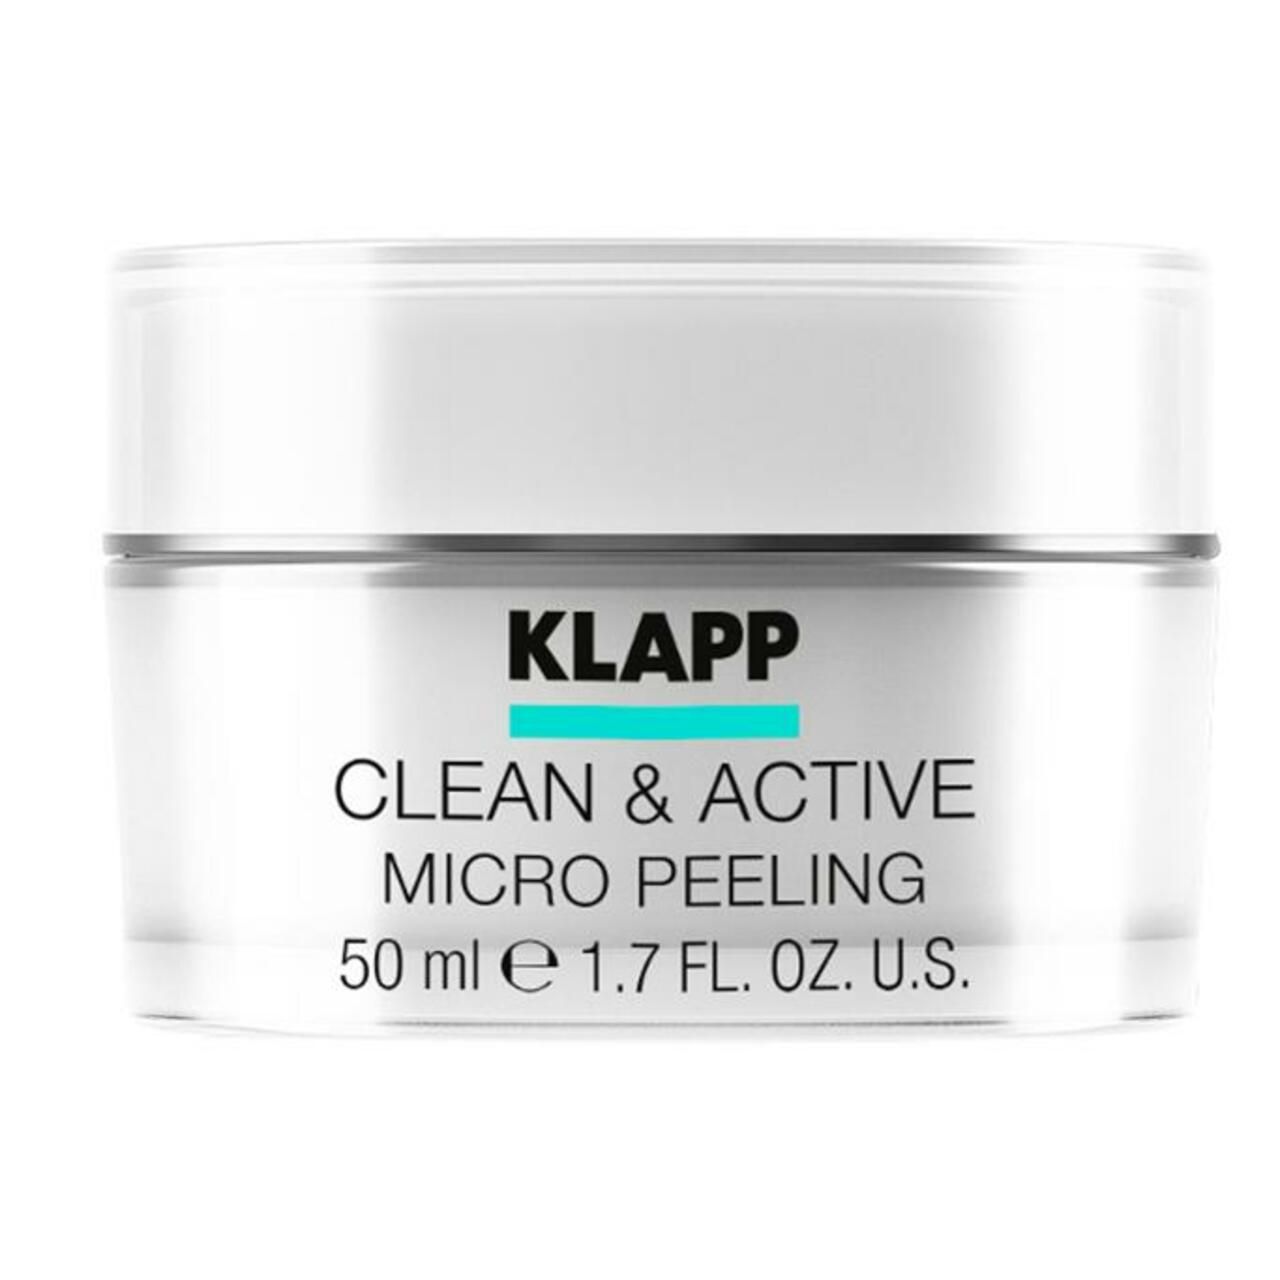 Klapp, Clean & Active Micro Peeling